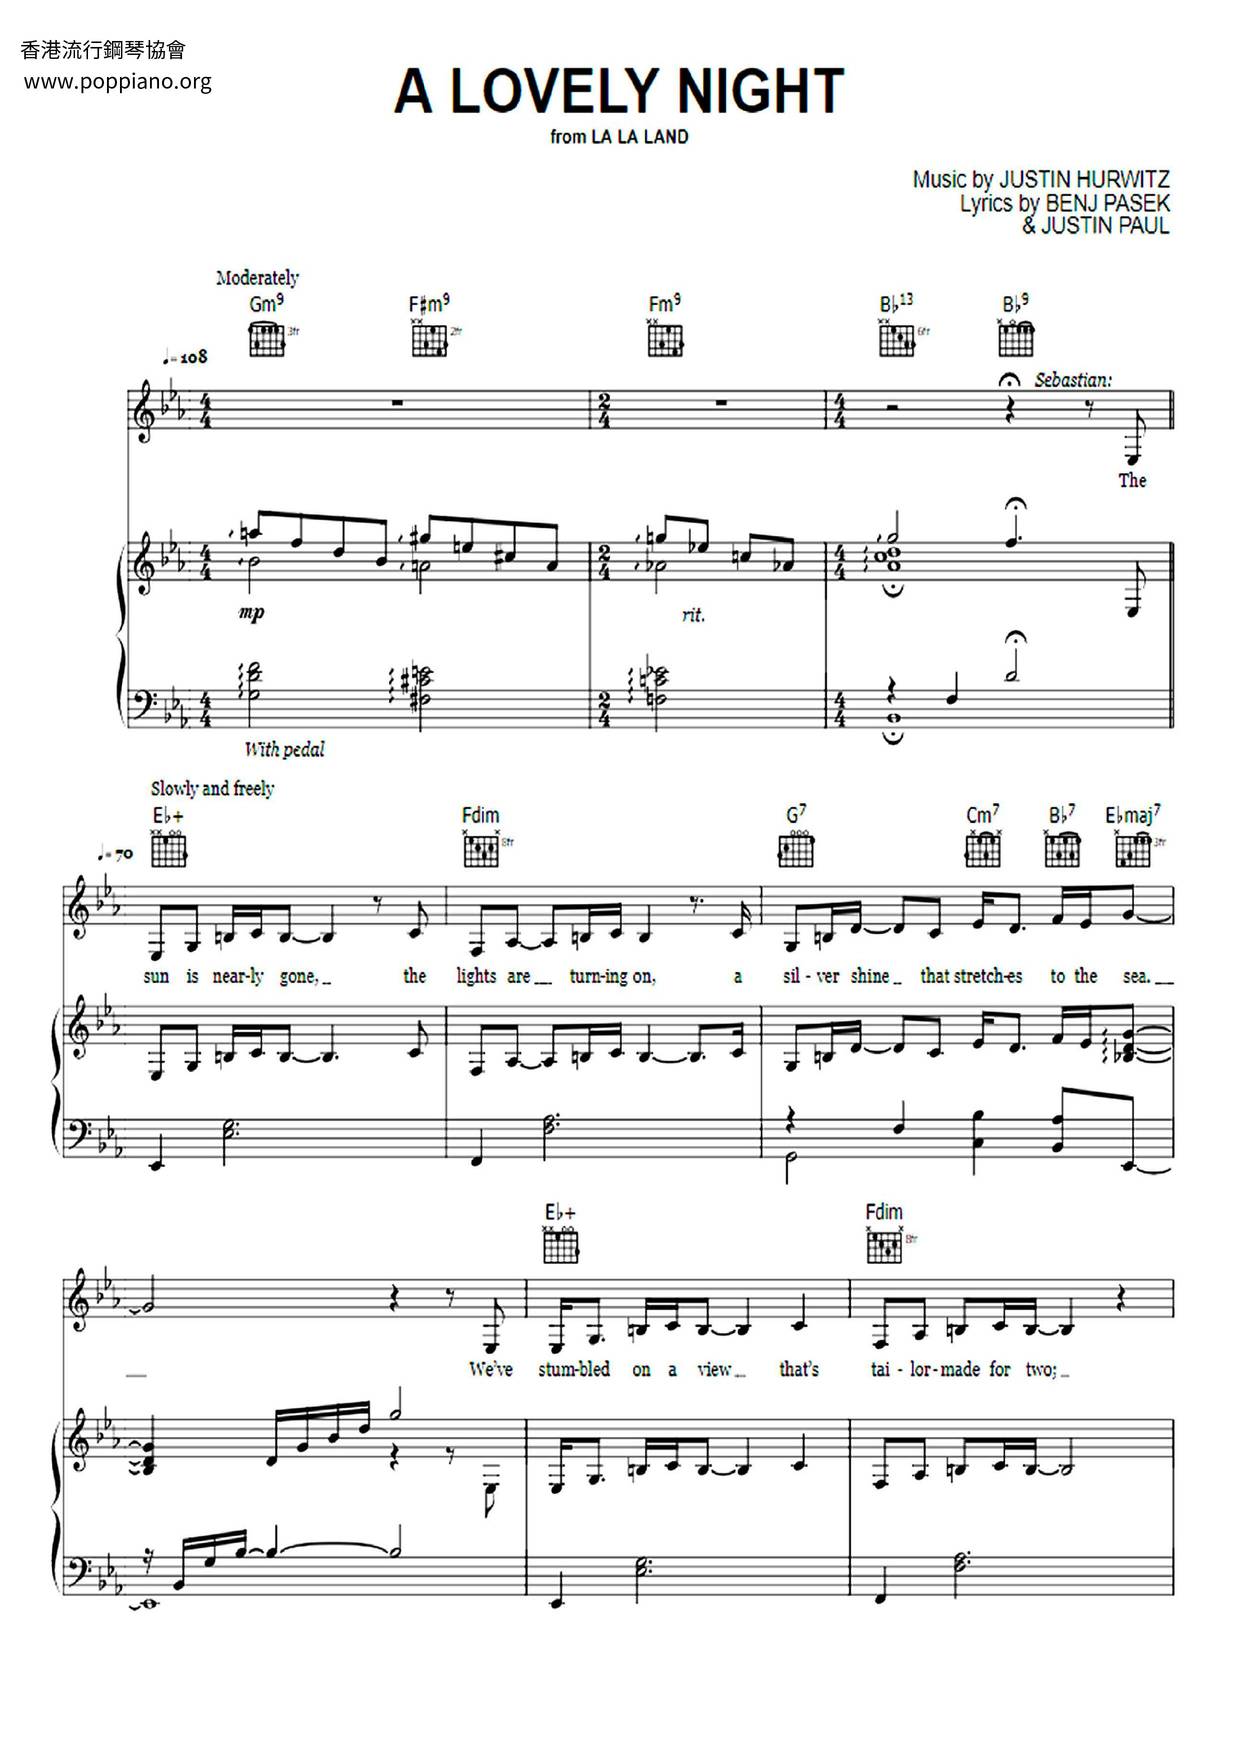 La La Land - A Lovely Nightピアノ譜